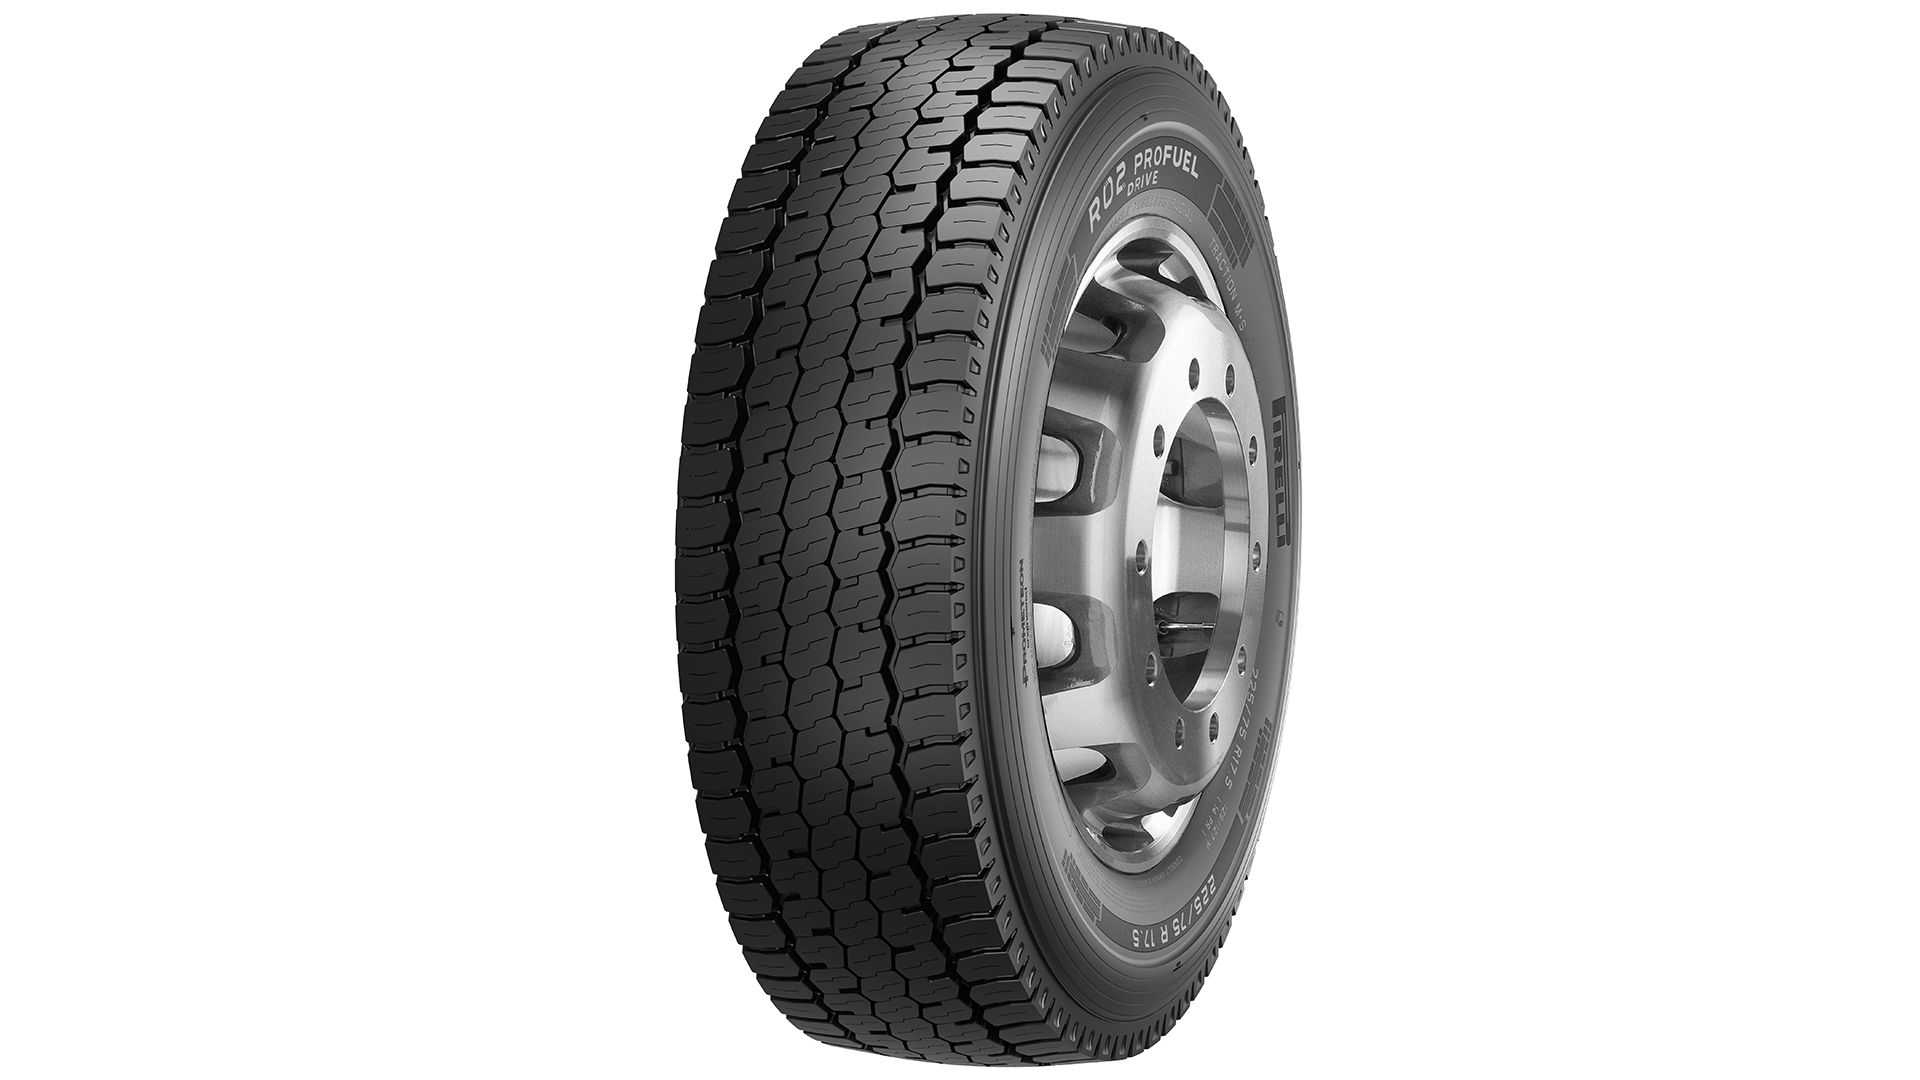 Gomme Nuove Pirelli 285/70 R19.5 146/144L R02 PROFUEL D M+S (8.00mm) pneumatici nuovi Estivo